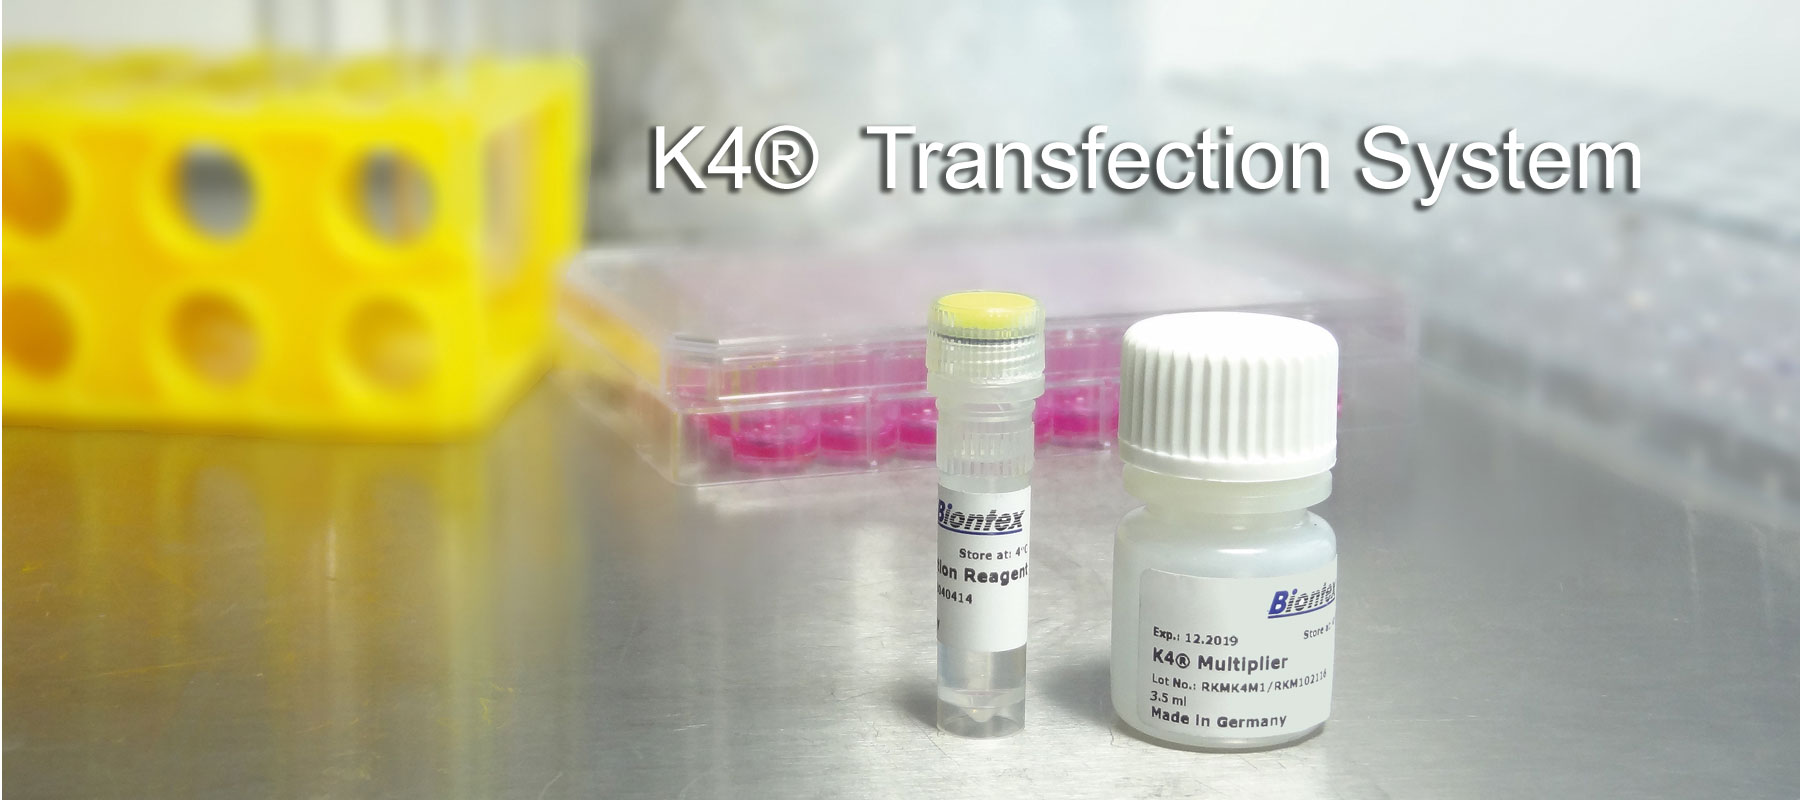 K4 Transfection System